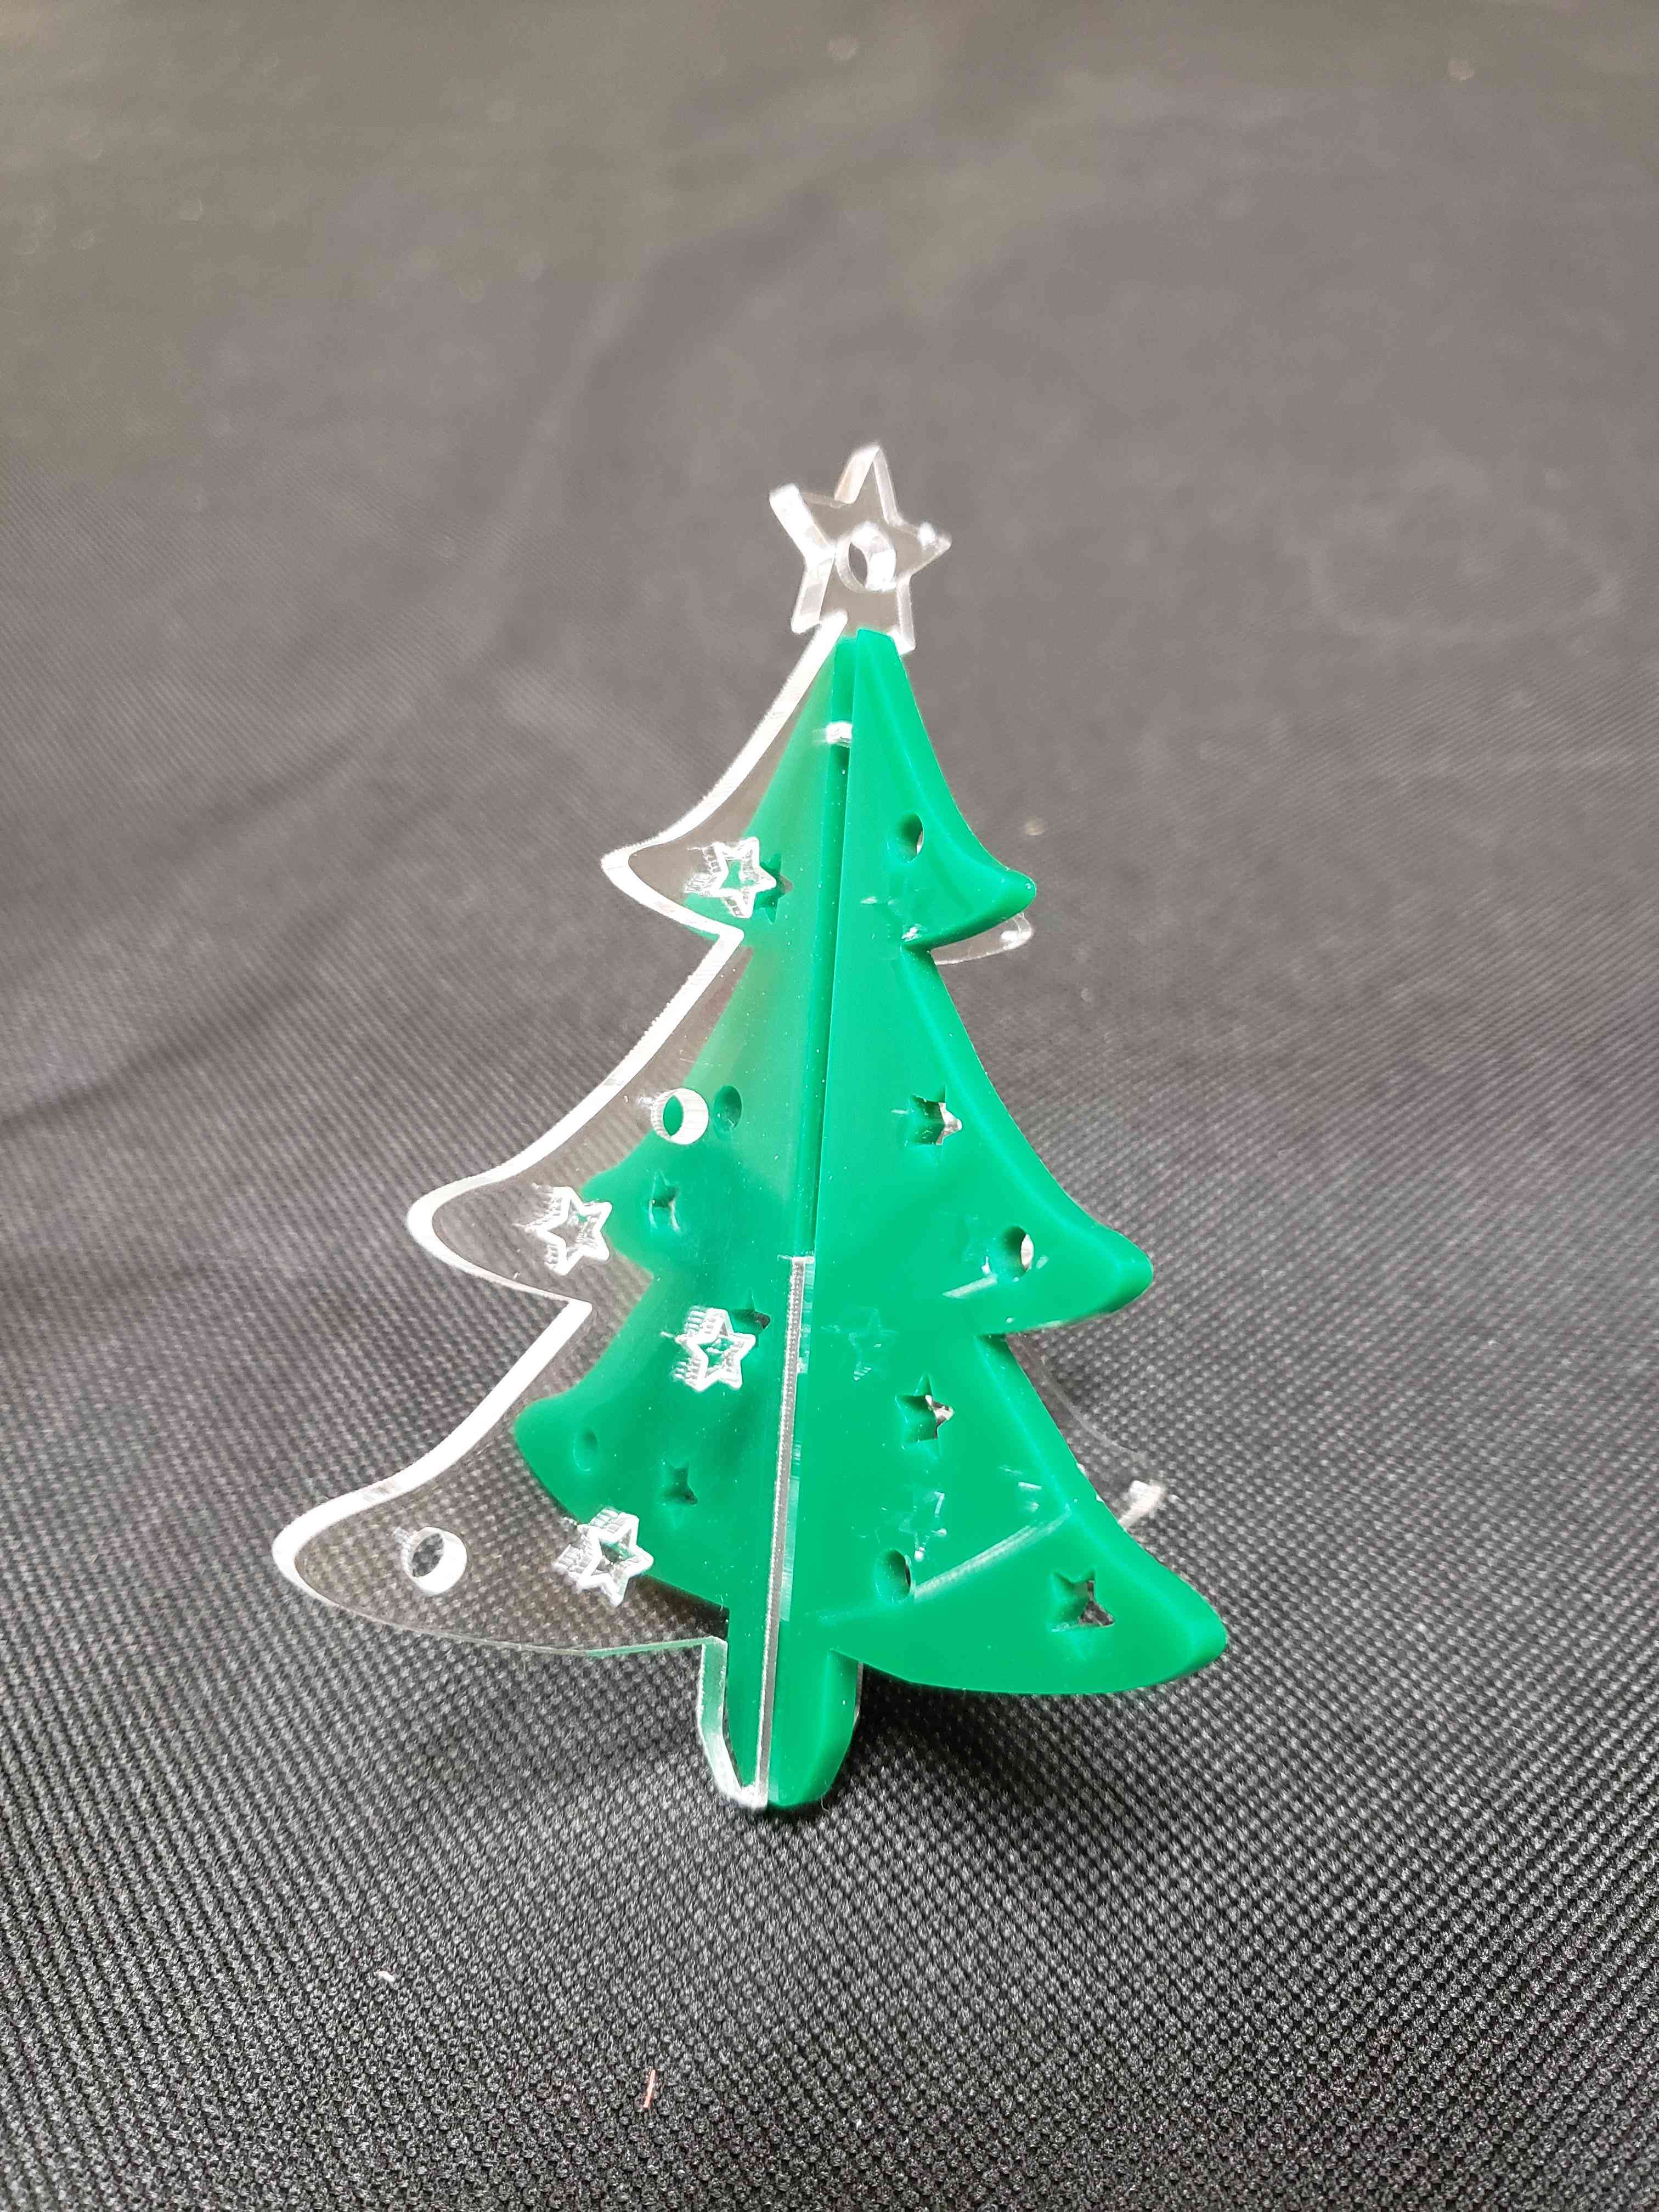 3D Laser Cut Christmas Tree Ornament (4